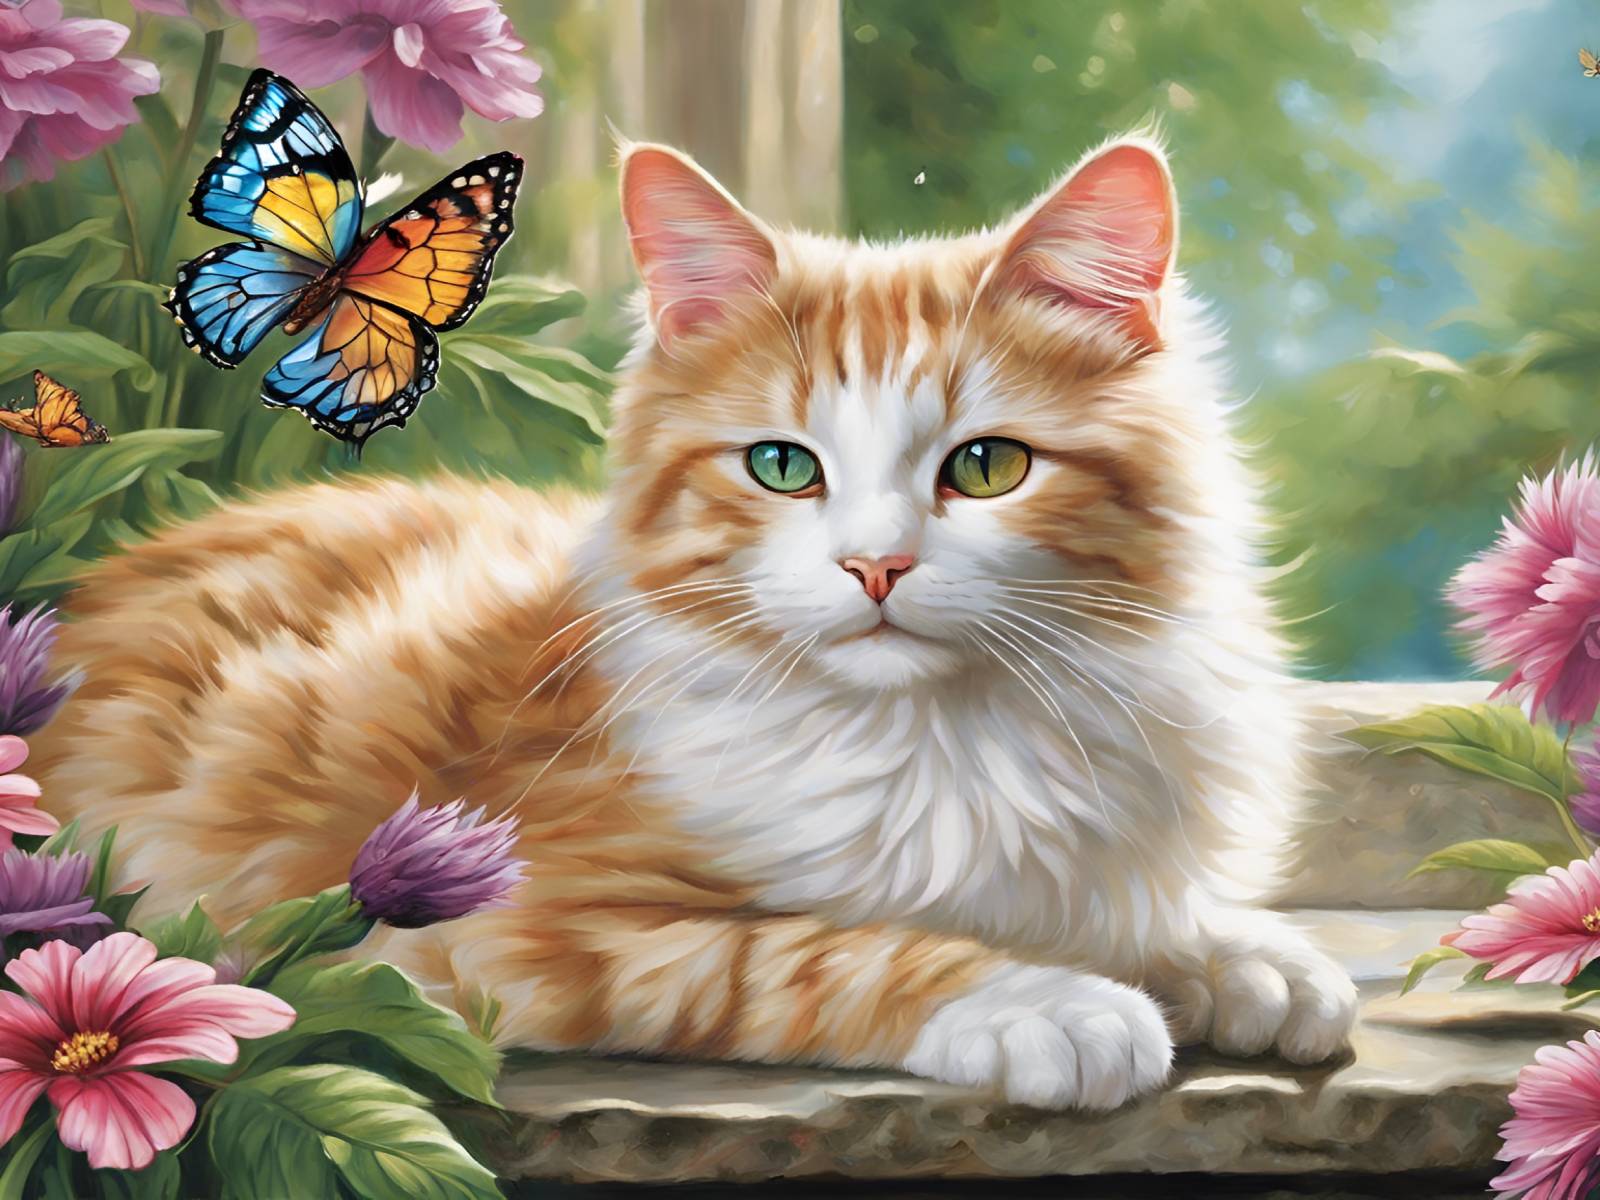 diamants-wizard-diamond-painting-kits-Animaux-Cat-Butterfly-Bliss-original.jpg